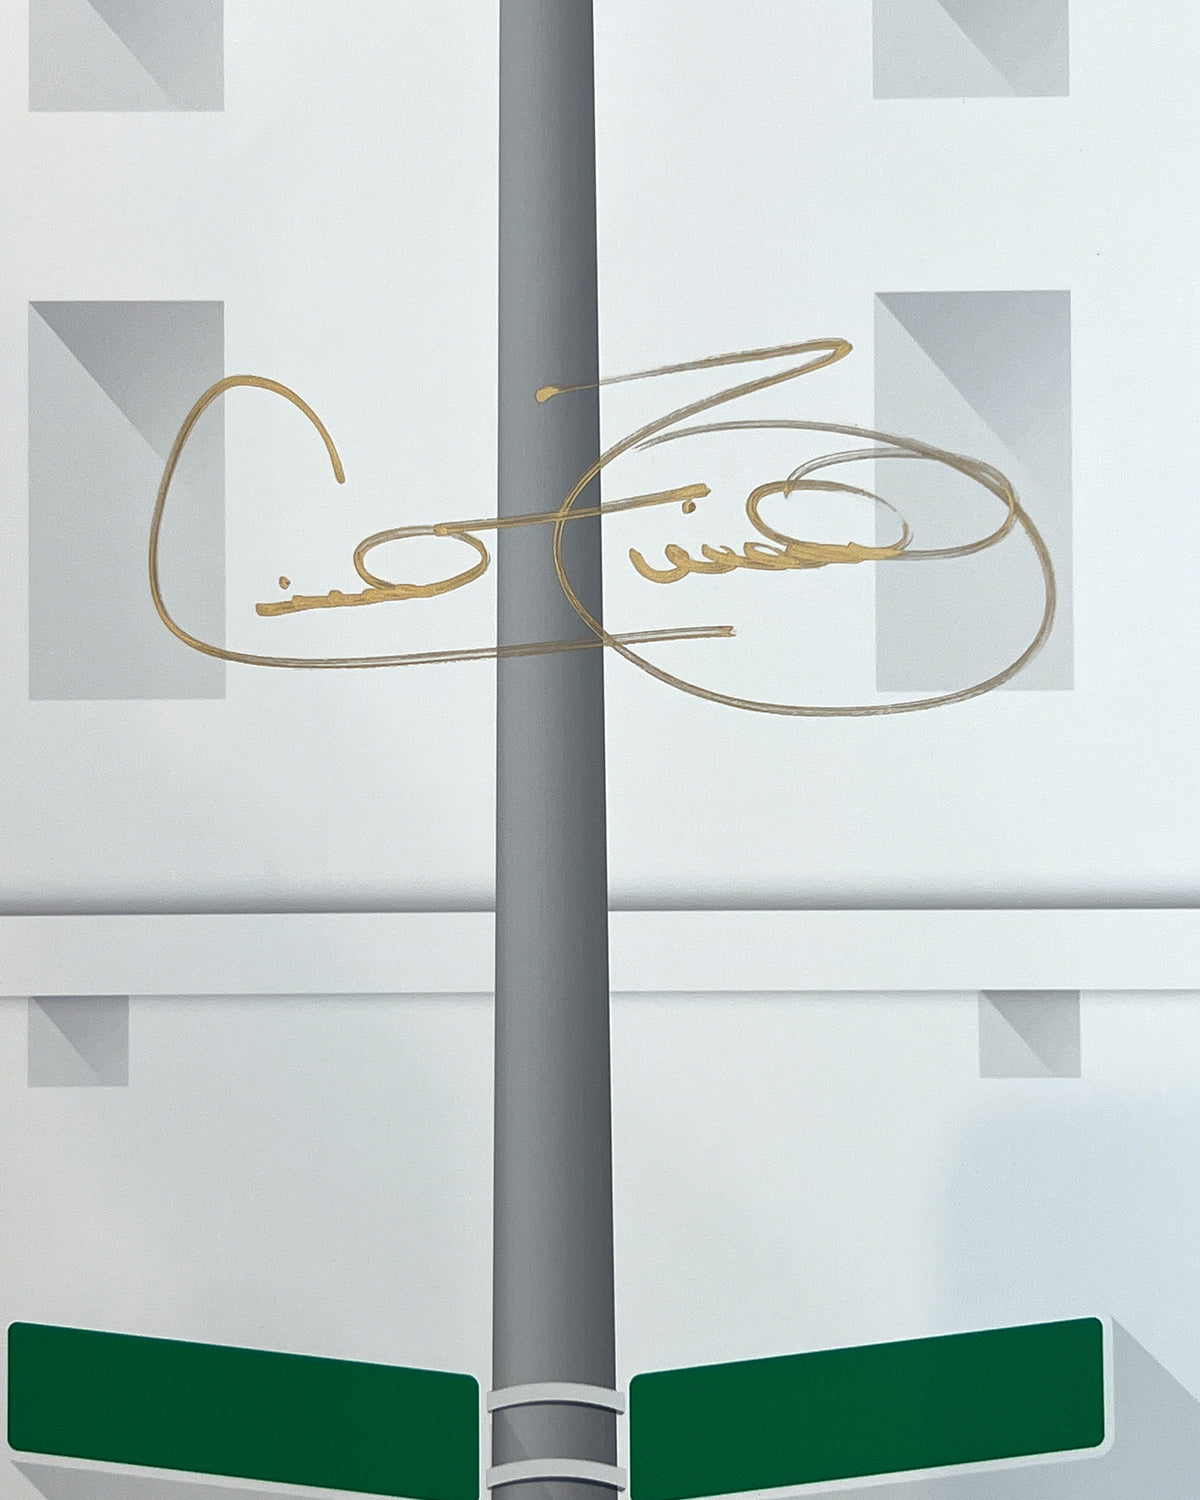 Minimalist Tiger Stadium - Cecil Fielder Autographed Signature